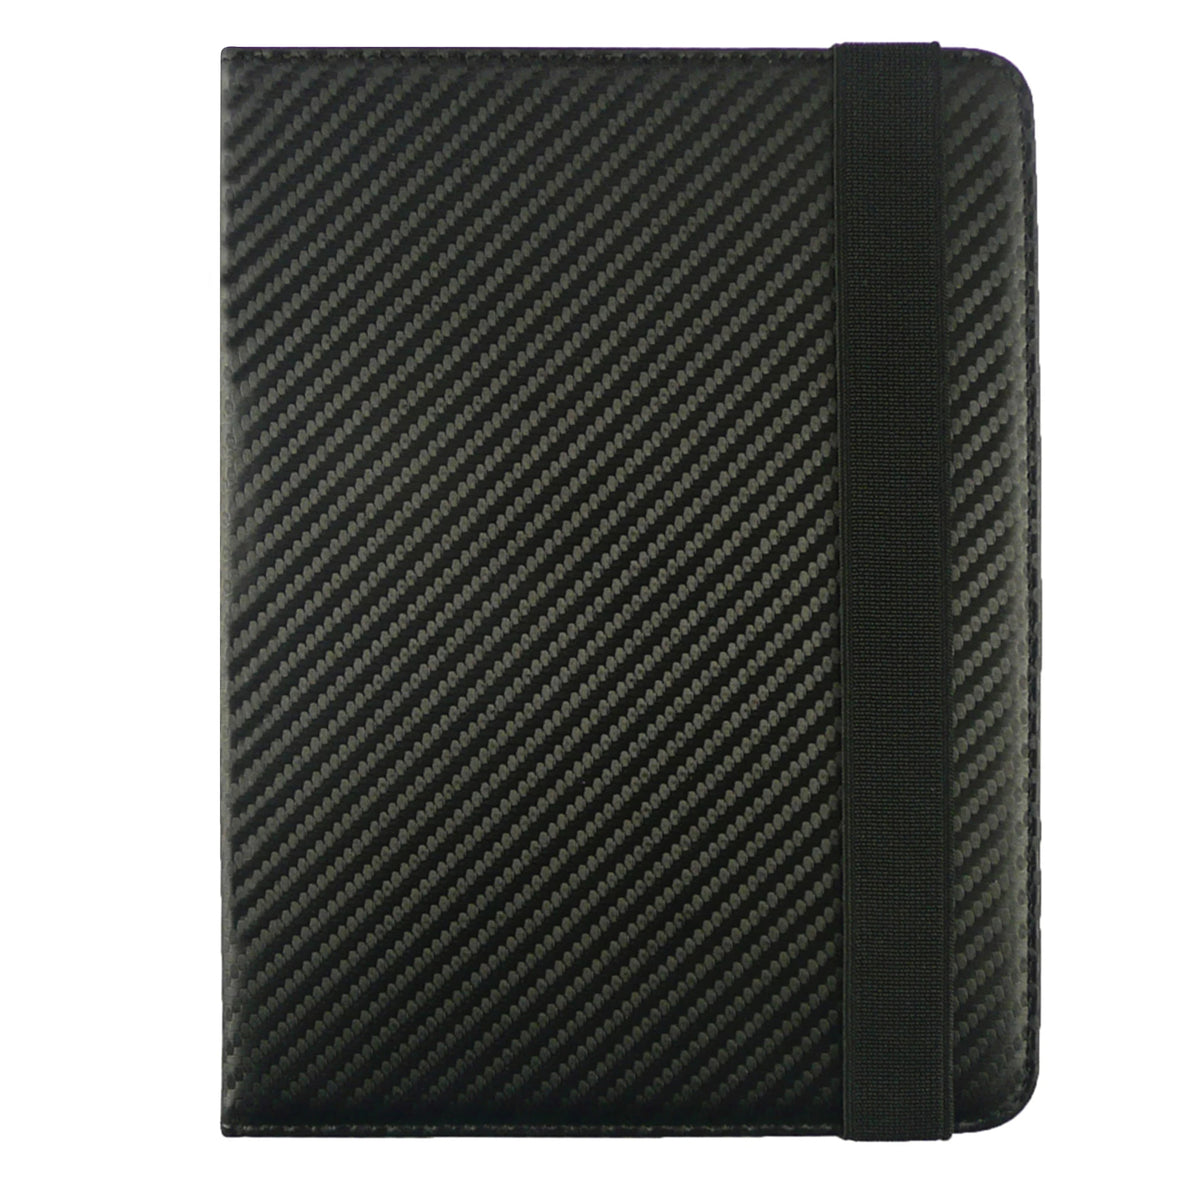 Universal Tablet Case - Black Carbon